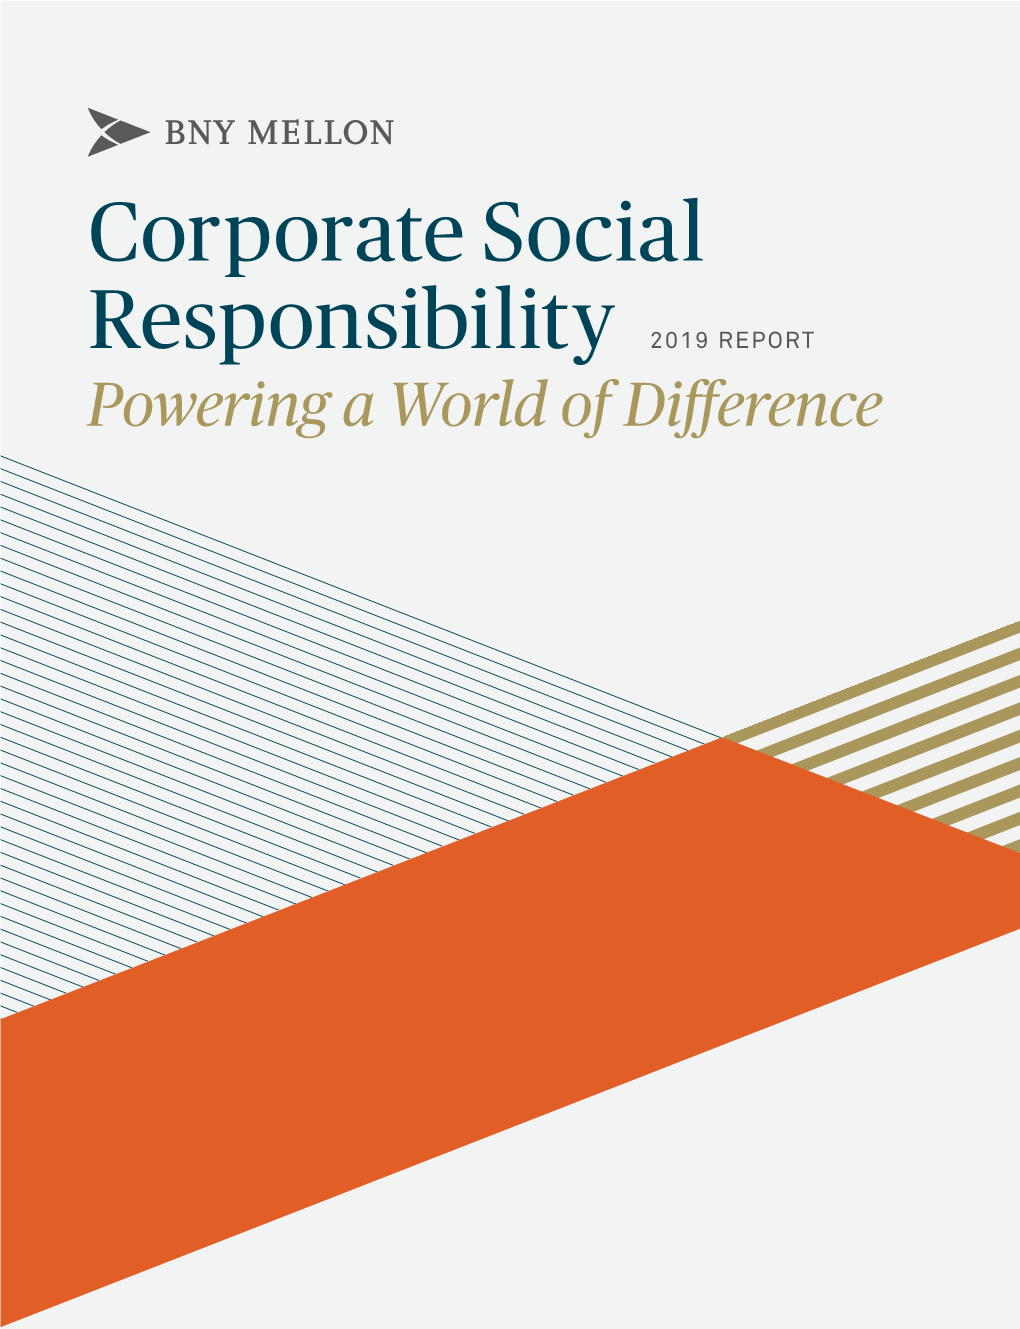 BNY Mellon Corporate Social Responsibility 2019 Report